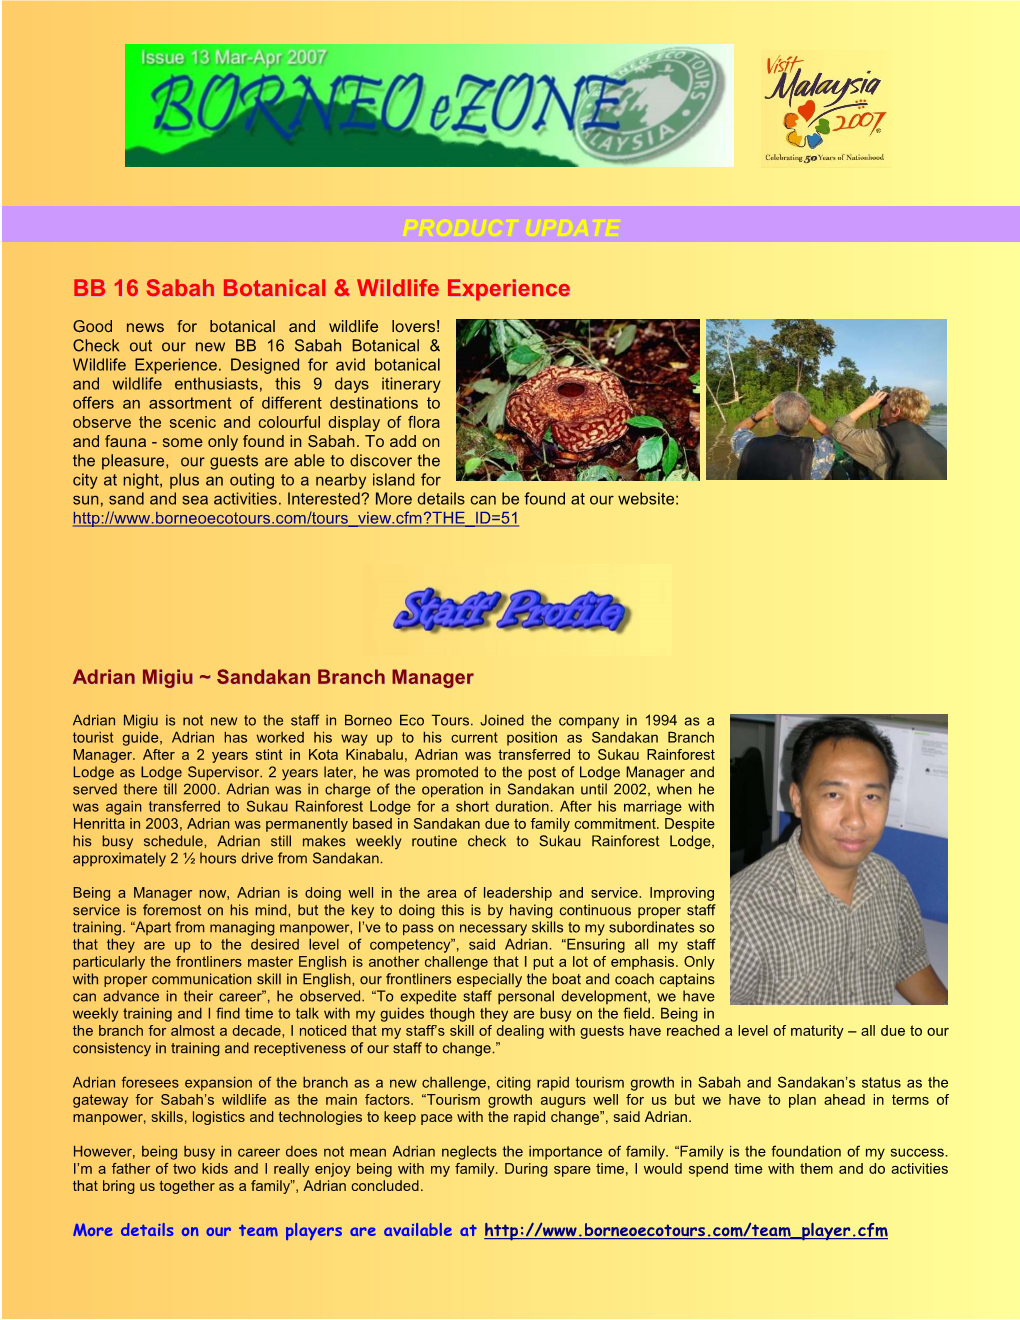 PRODUCT UPDATE BB 16 Sabah Botanical & Wildlife Experience